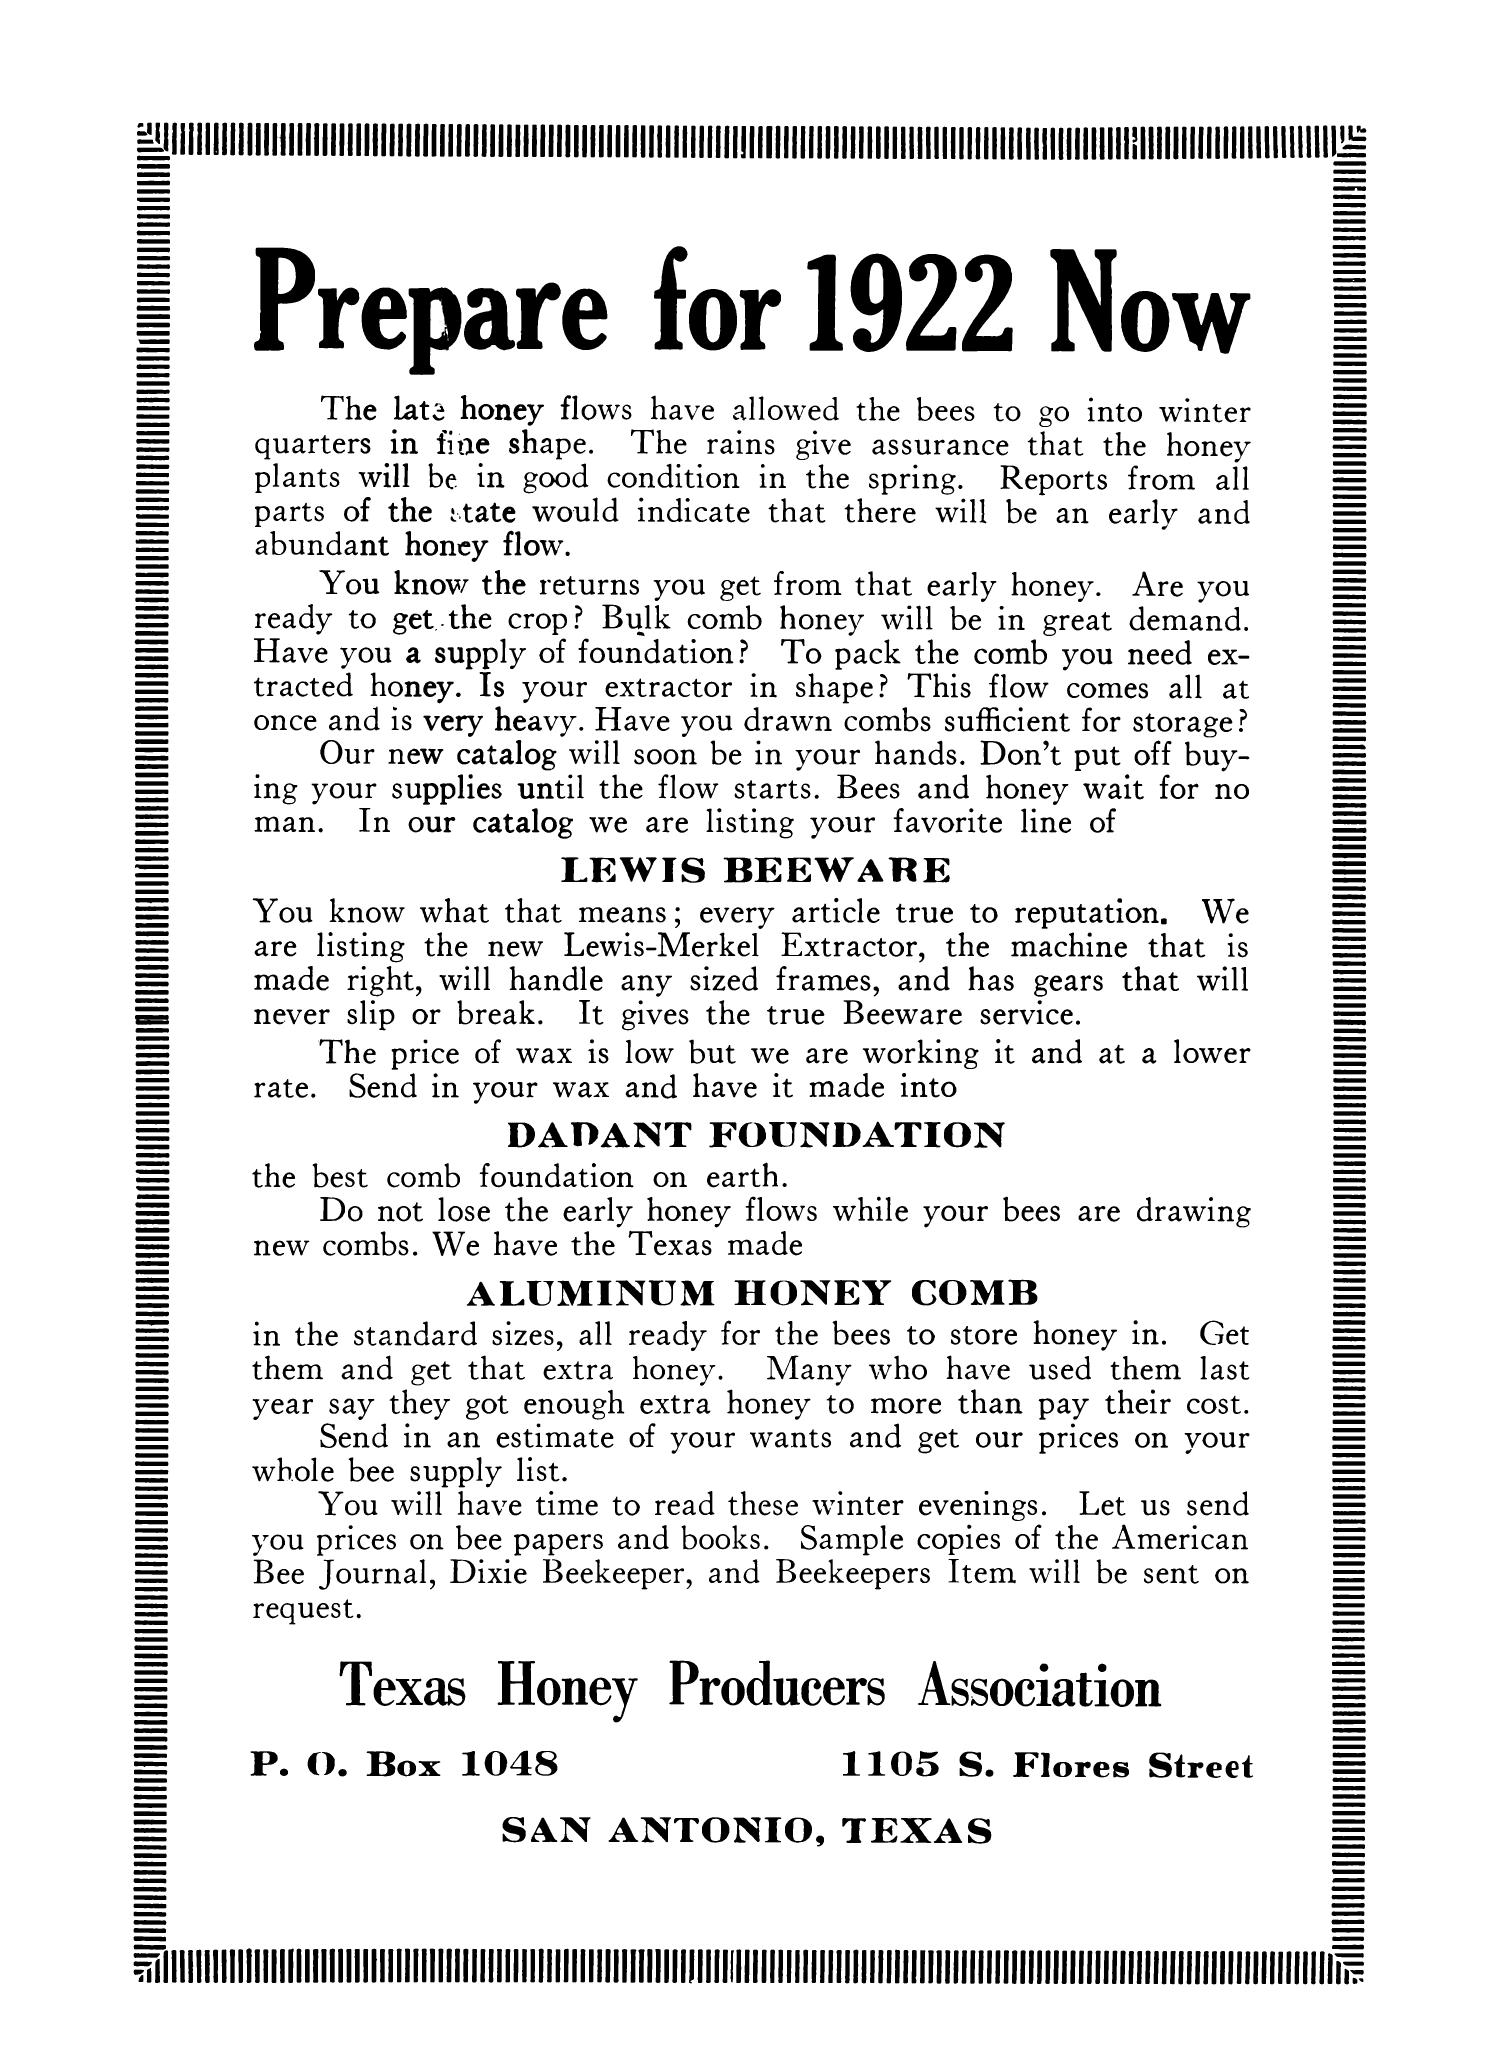 The Beekeeper's Item, Volume 5, Number 11-12, November-December 1921
                                                
                                                    None
                                                